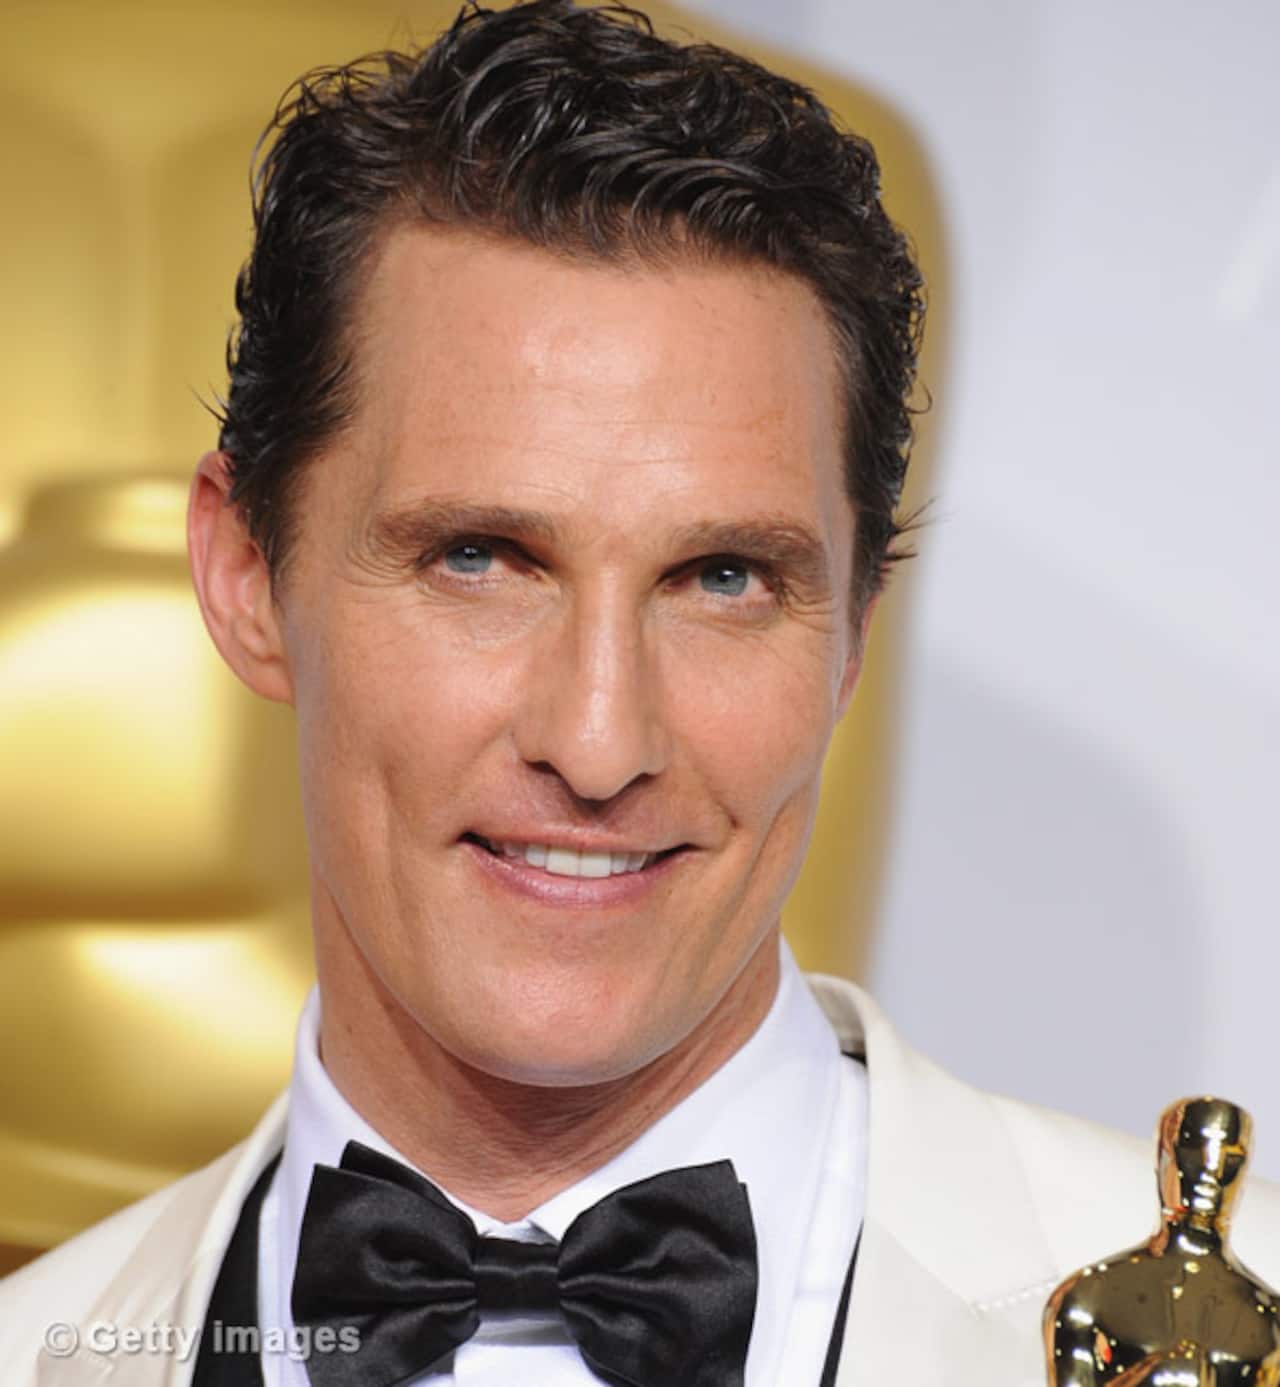 Oscar winners list 2014: Matthew McConaughey wins best actor award for ...